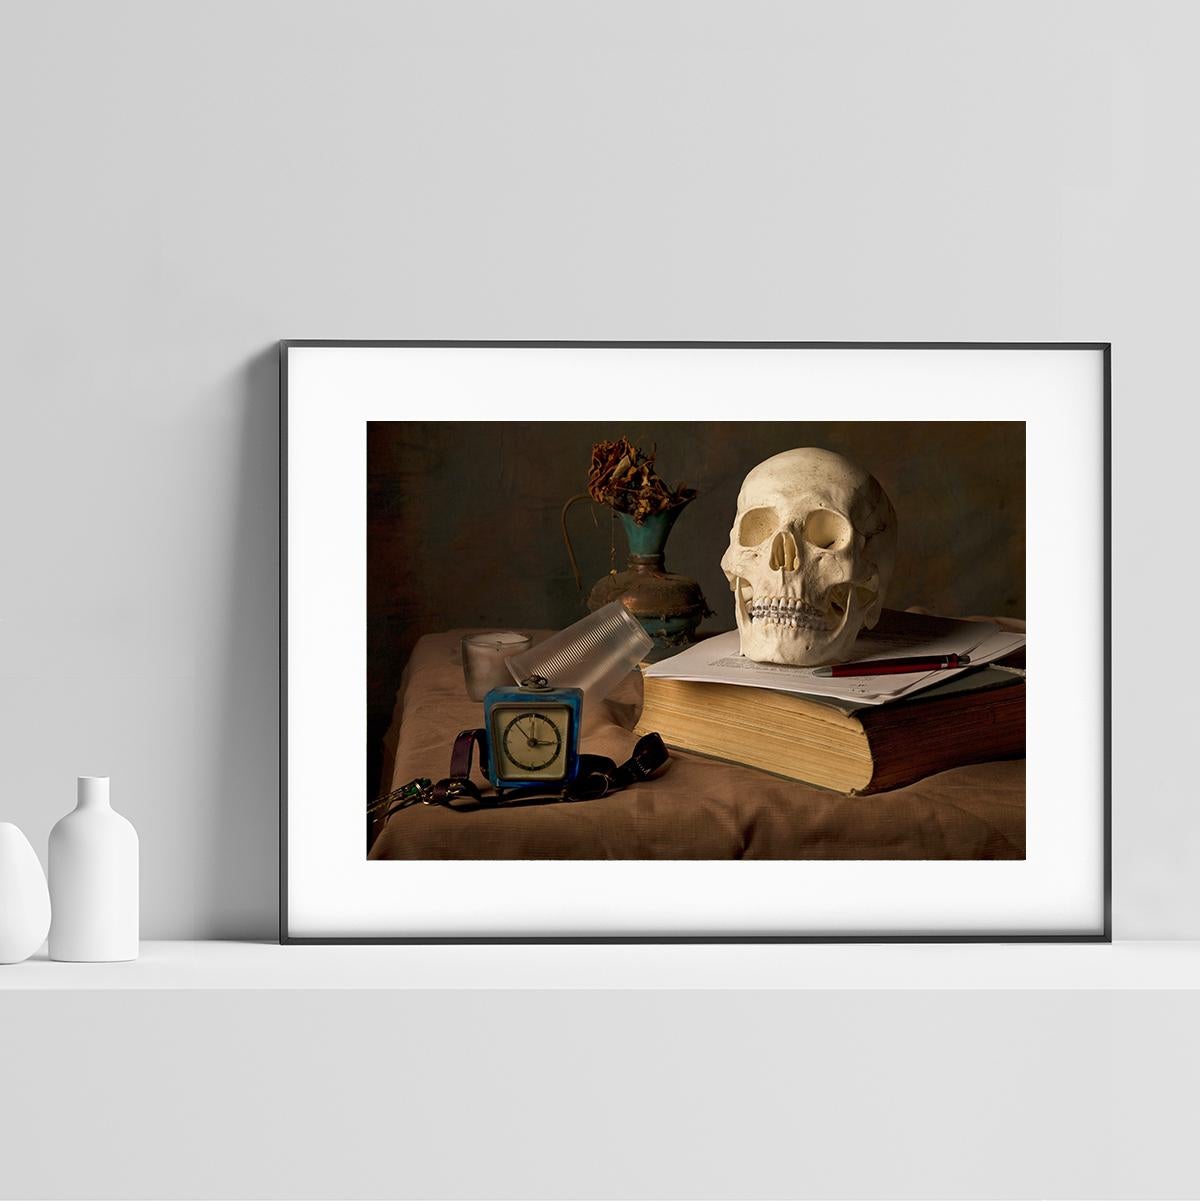 Skull I - Photography, Still Life, Baroque, Contemporary, Art, Time, Aaron Alamo - Black Color Photograph by Aaron Álamo